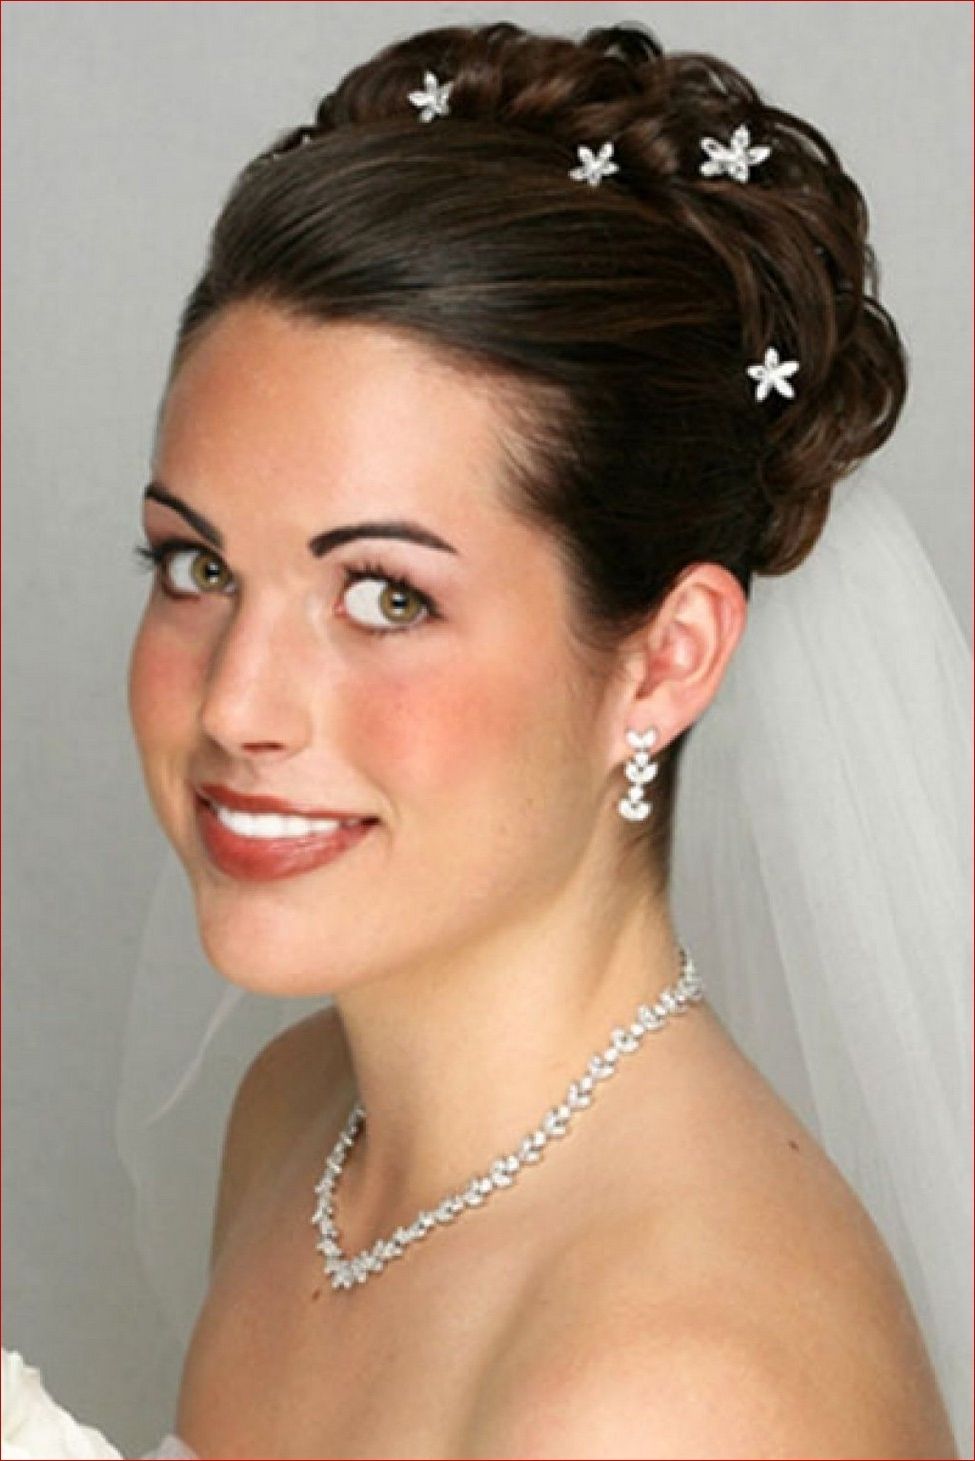 Medium Length Updo Hairstyles For Weddings | Within Updo Hairstyles For Medium Length Hair (View 11 of 15)